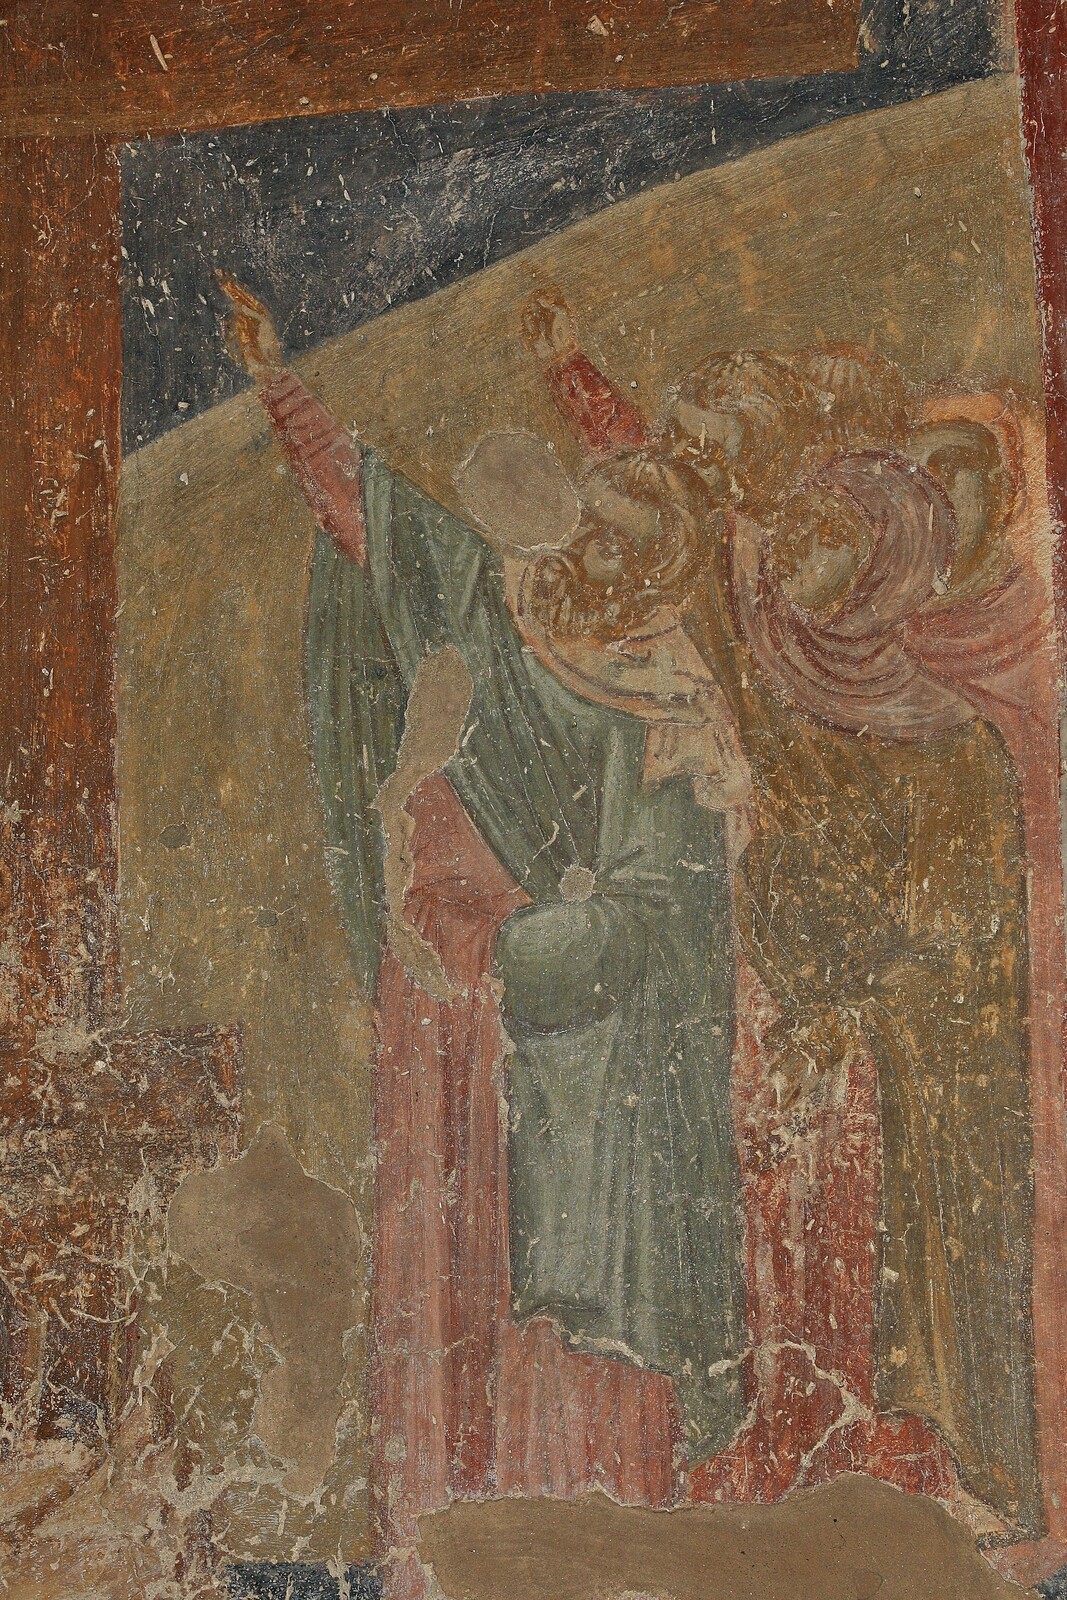 Jesus Mounting the Cross, detail